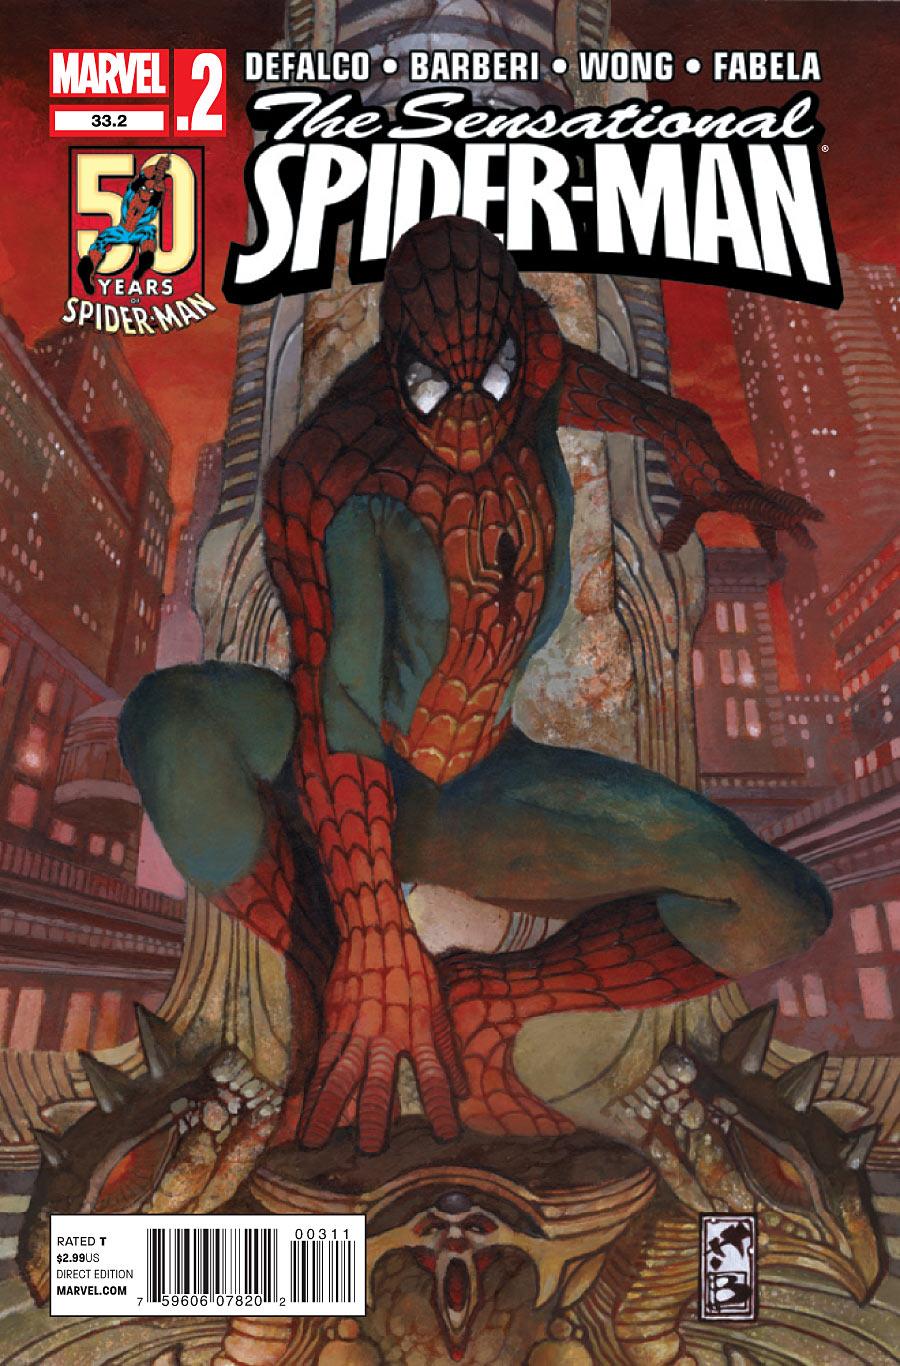 The Sensational Spider-Man Vol. 1 #33.2